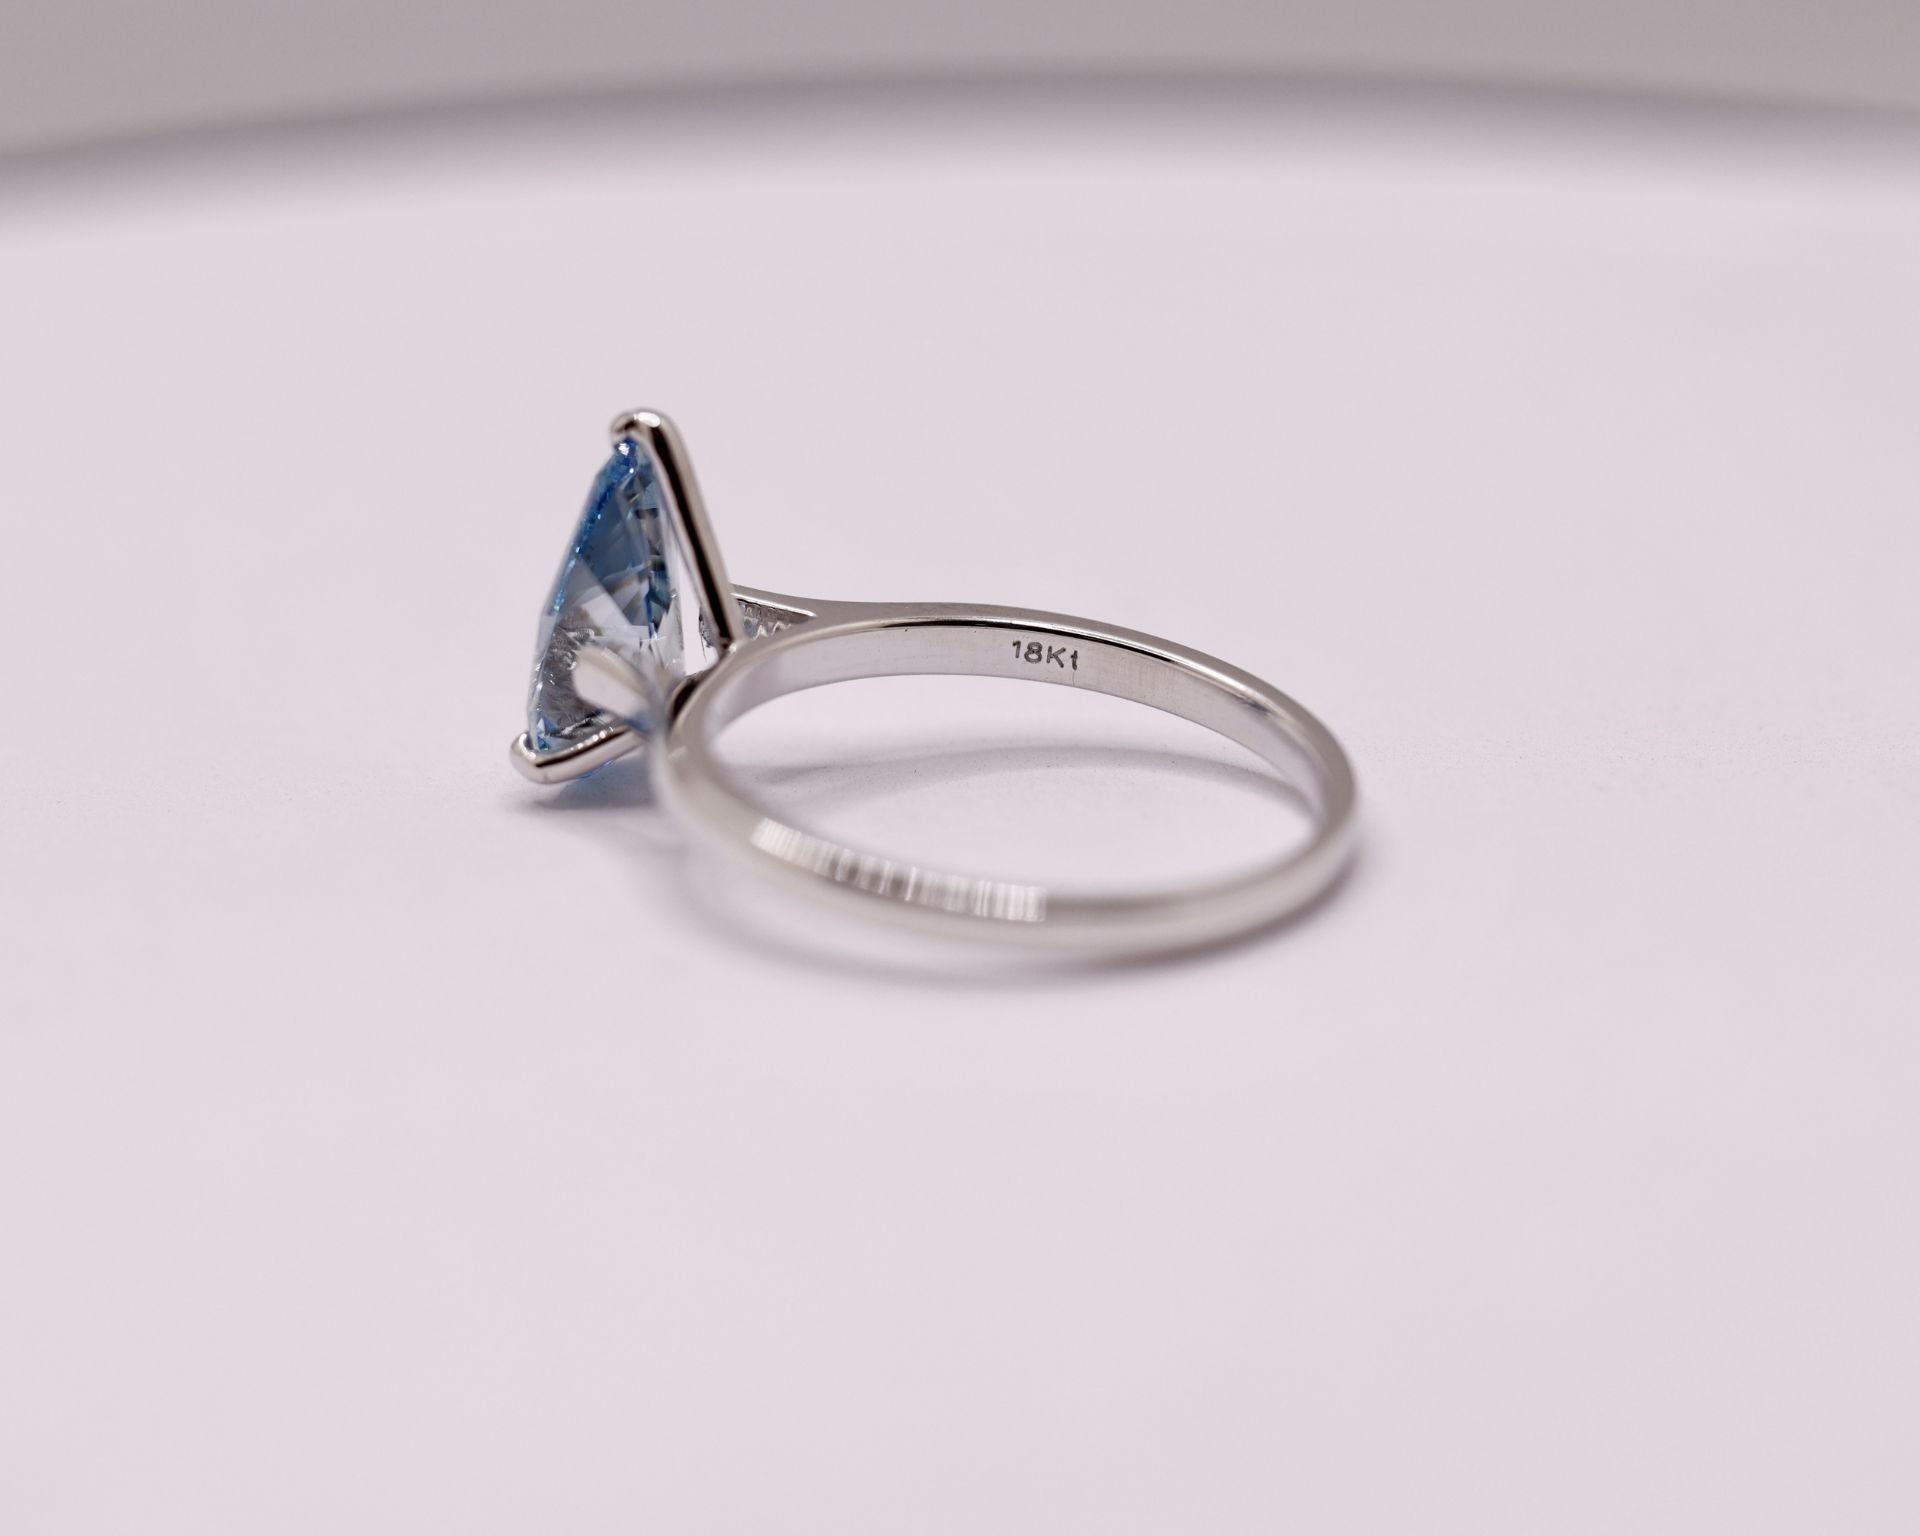 ** ON SALE ** Fancy Blue Pear Cut 1.60 Carat Diamond 18Kt White Gold Ring - VS1 - Image 4 of 6